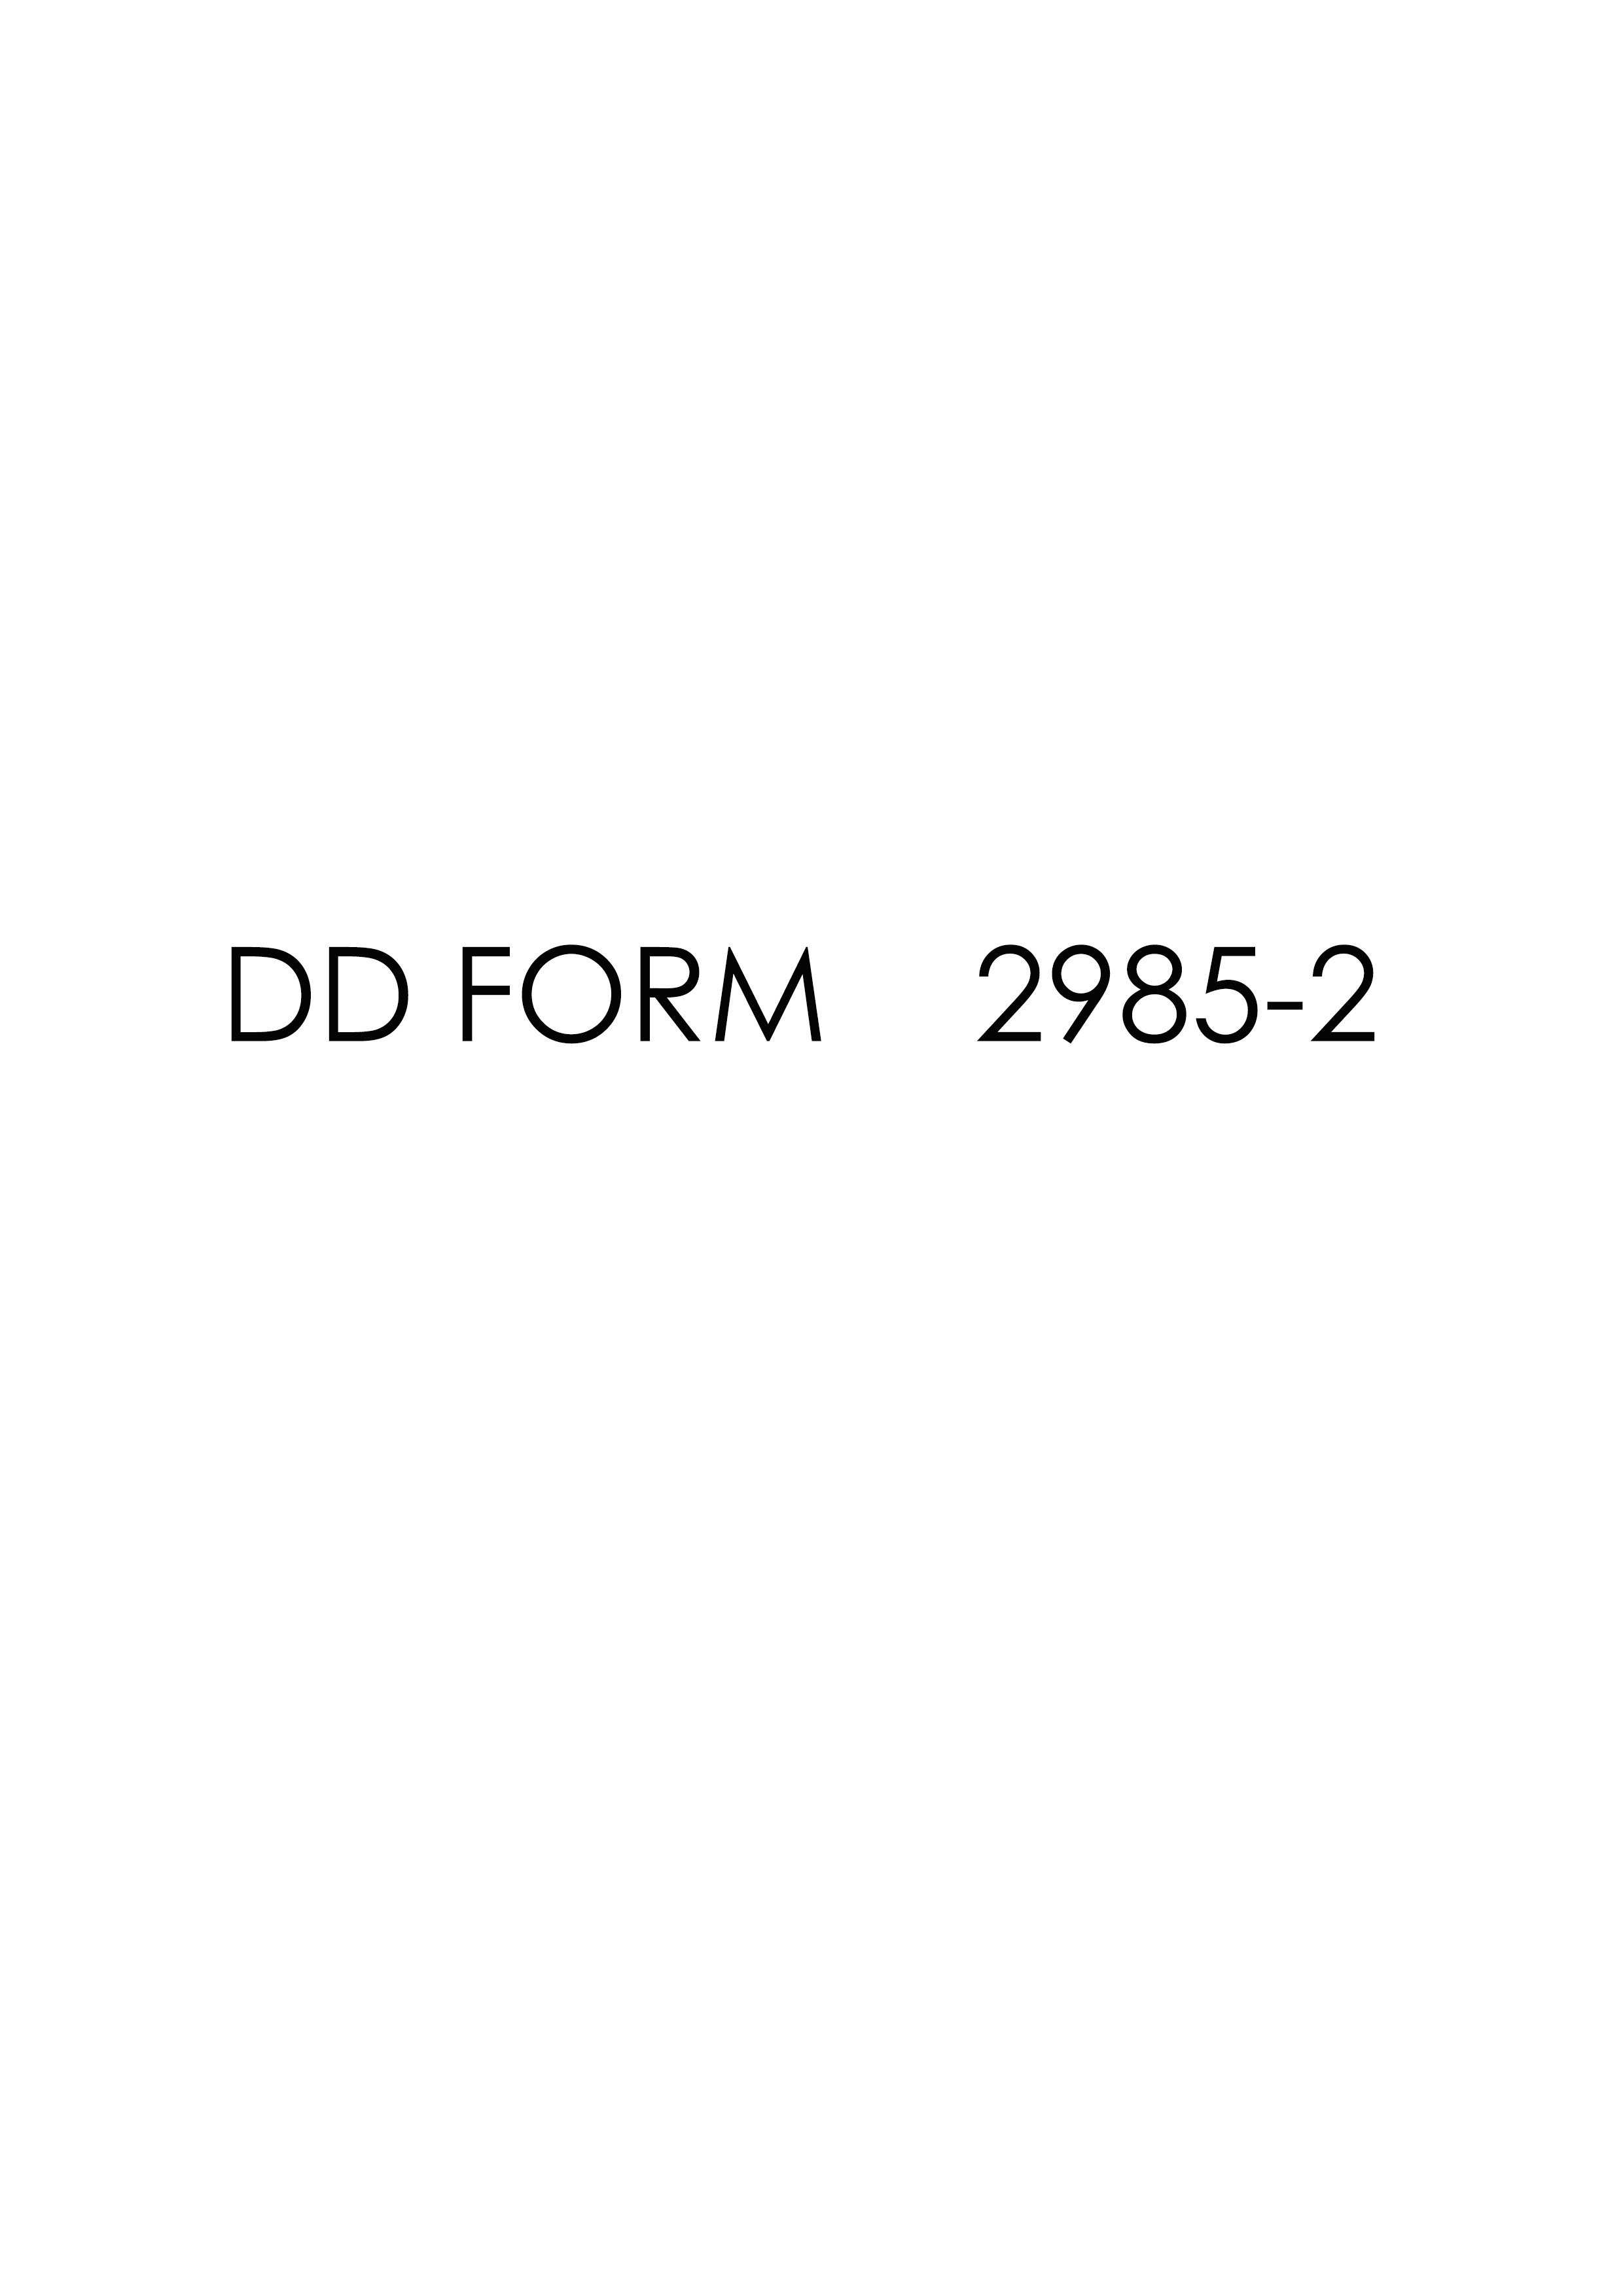 Download dd 2985-2 Form